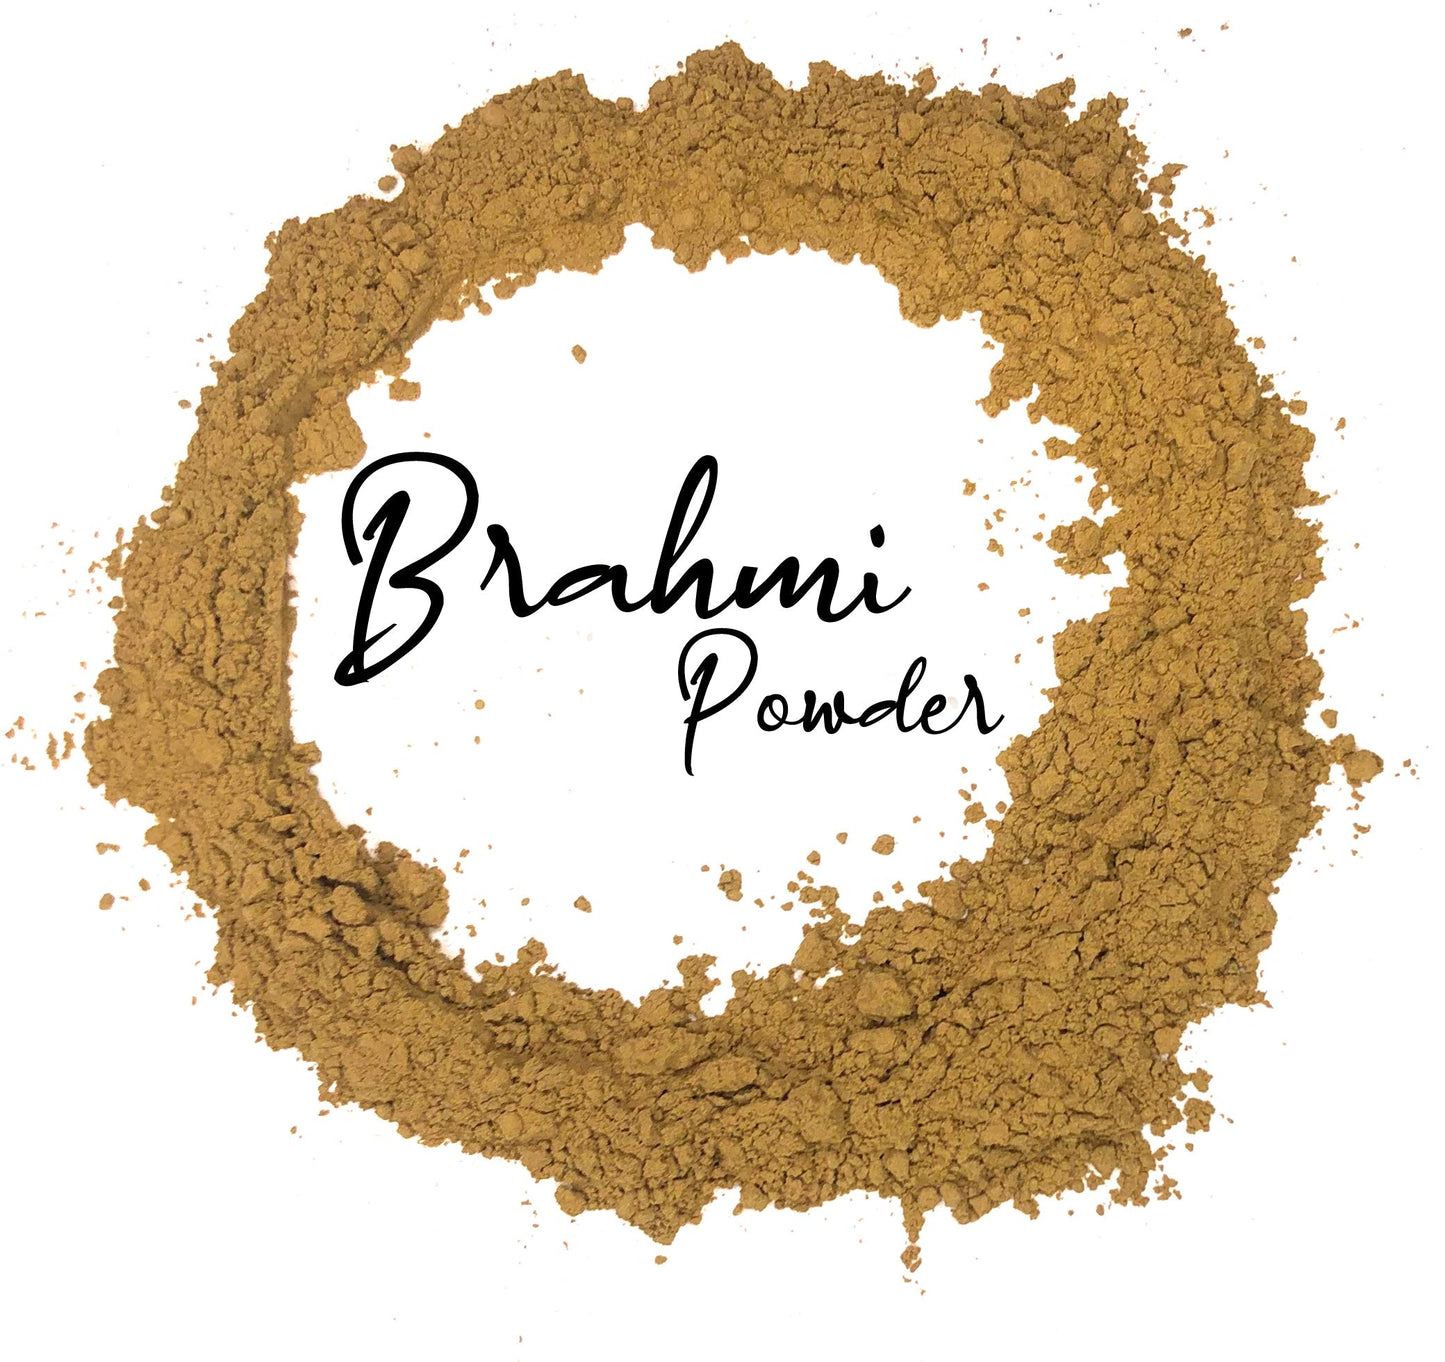 Wholesale Spices & Herbs - Brahmi (Bacopa) Powder, Organic 8oz(227g) Bag